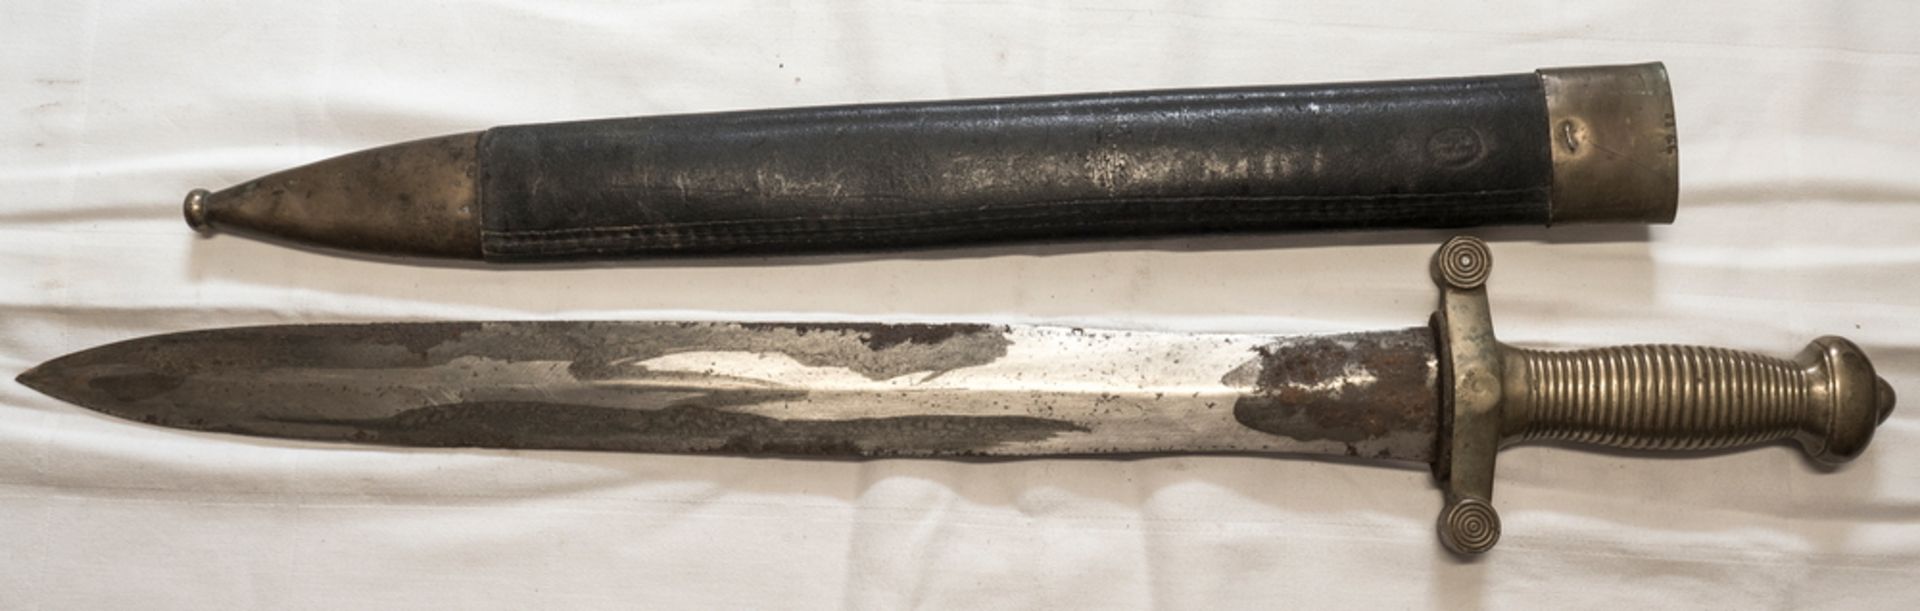 Frankreich Artillerie - Kurzschwert. Klingenlänge: ca. 48 cm, Klingenbreite: ca. 4,5 cm, - Bild 2 aus 5